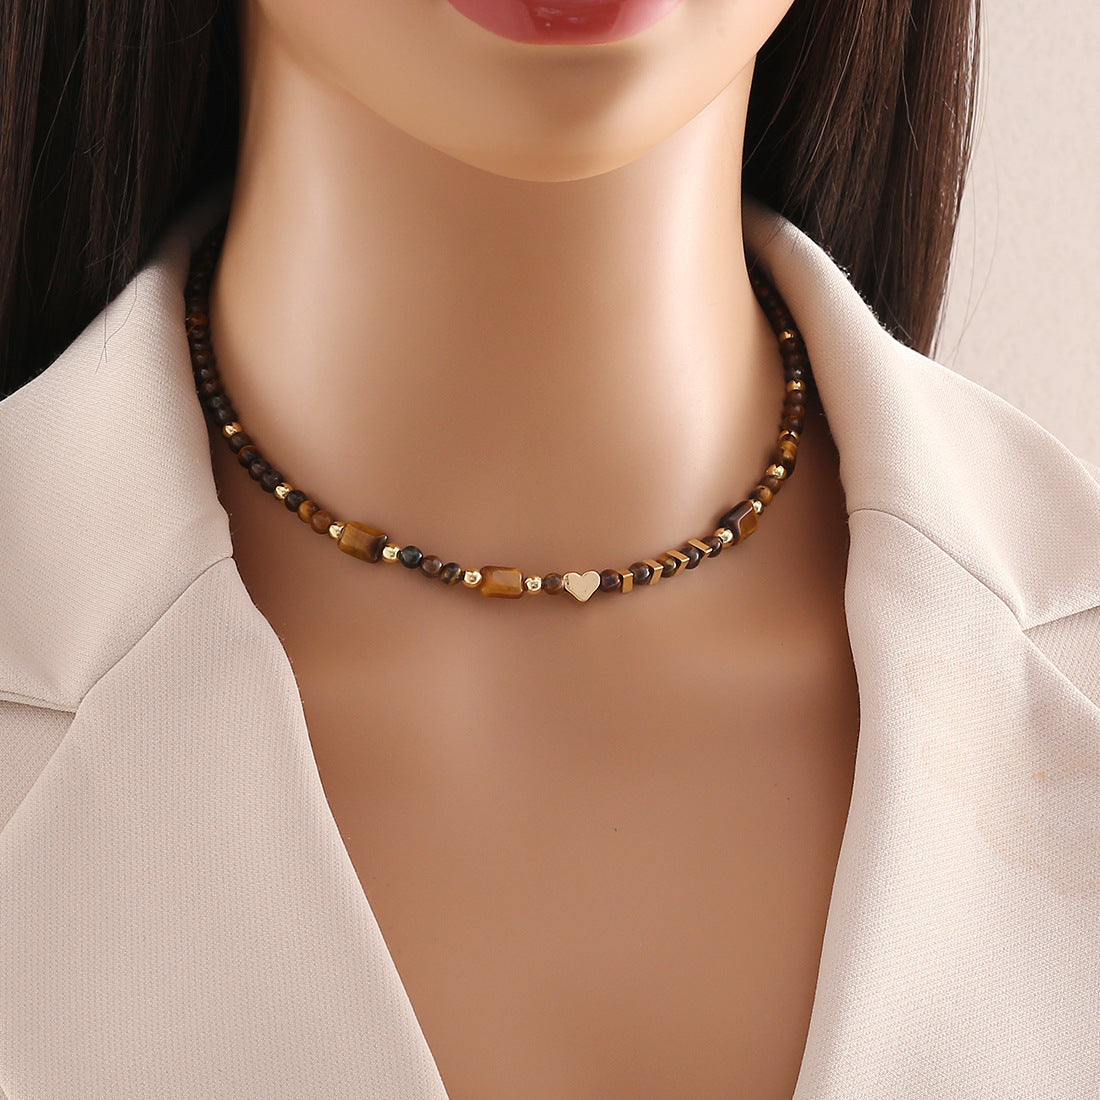 Tiger's eye Stone necklace Handmade beaded love collar N065